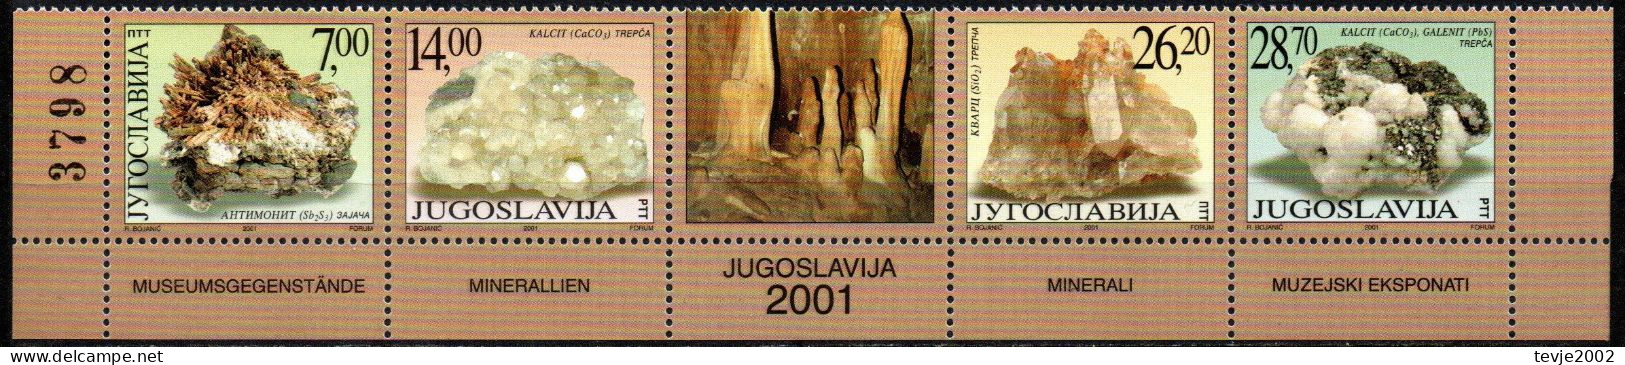 Jugoslawien 2001 - Mi.Nr. 3047 - 3050 - Postfrisch MNH - Mineralien Minerals - Mineralien